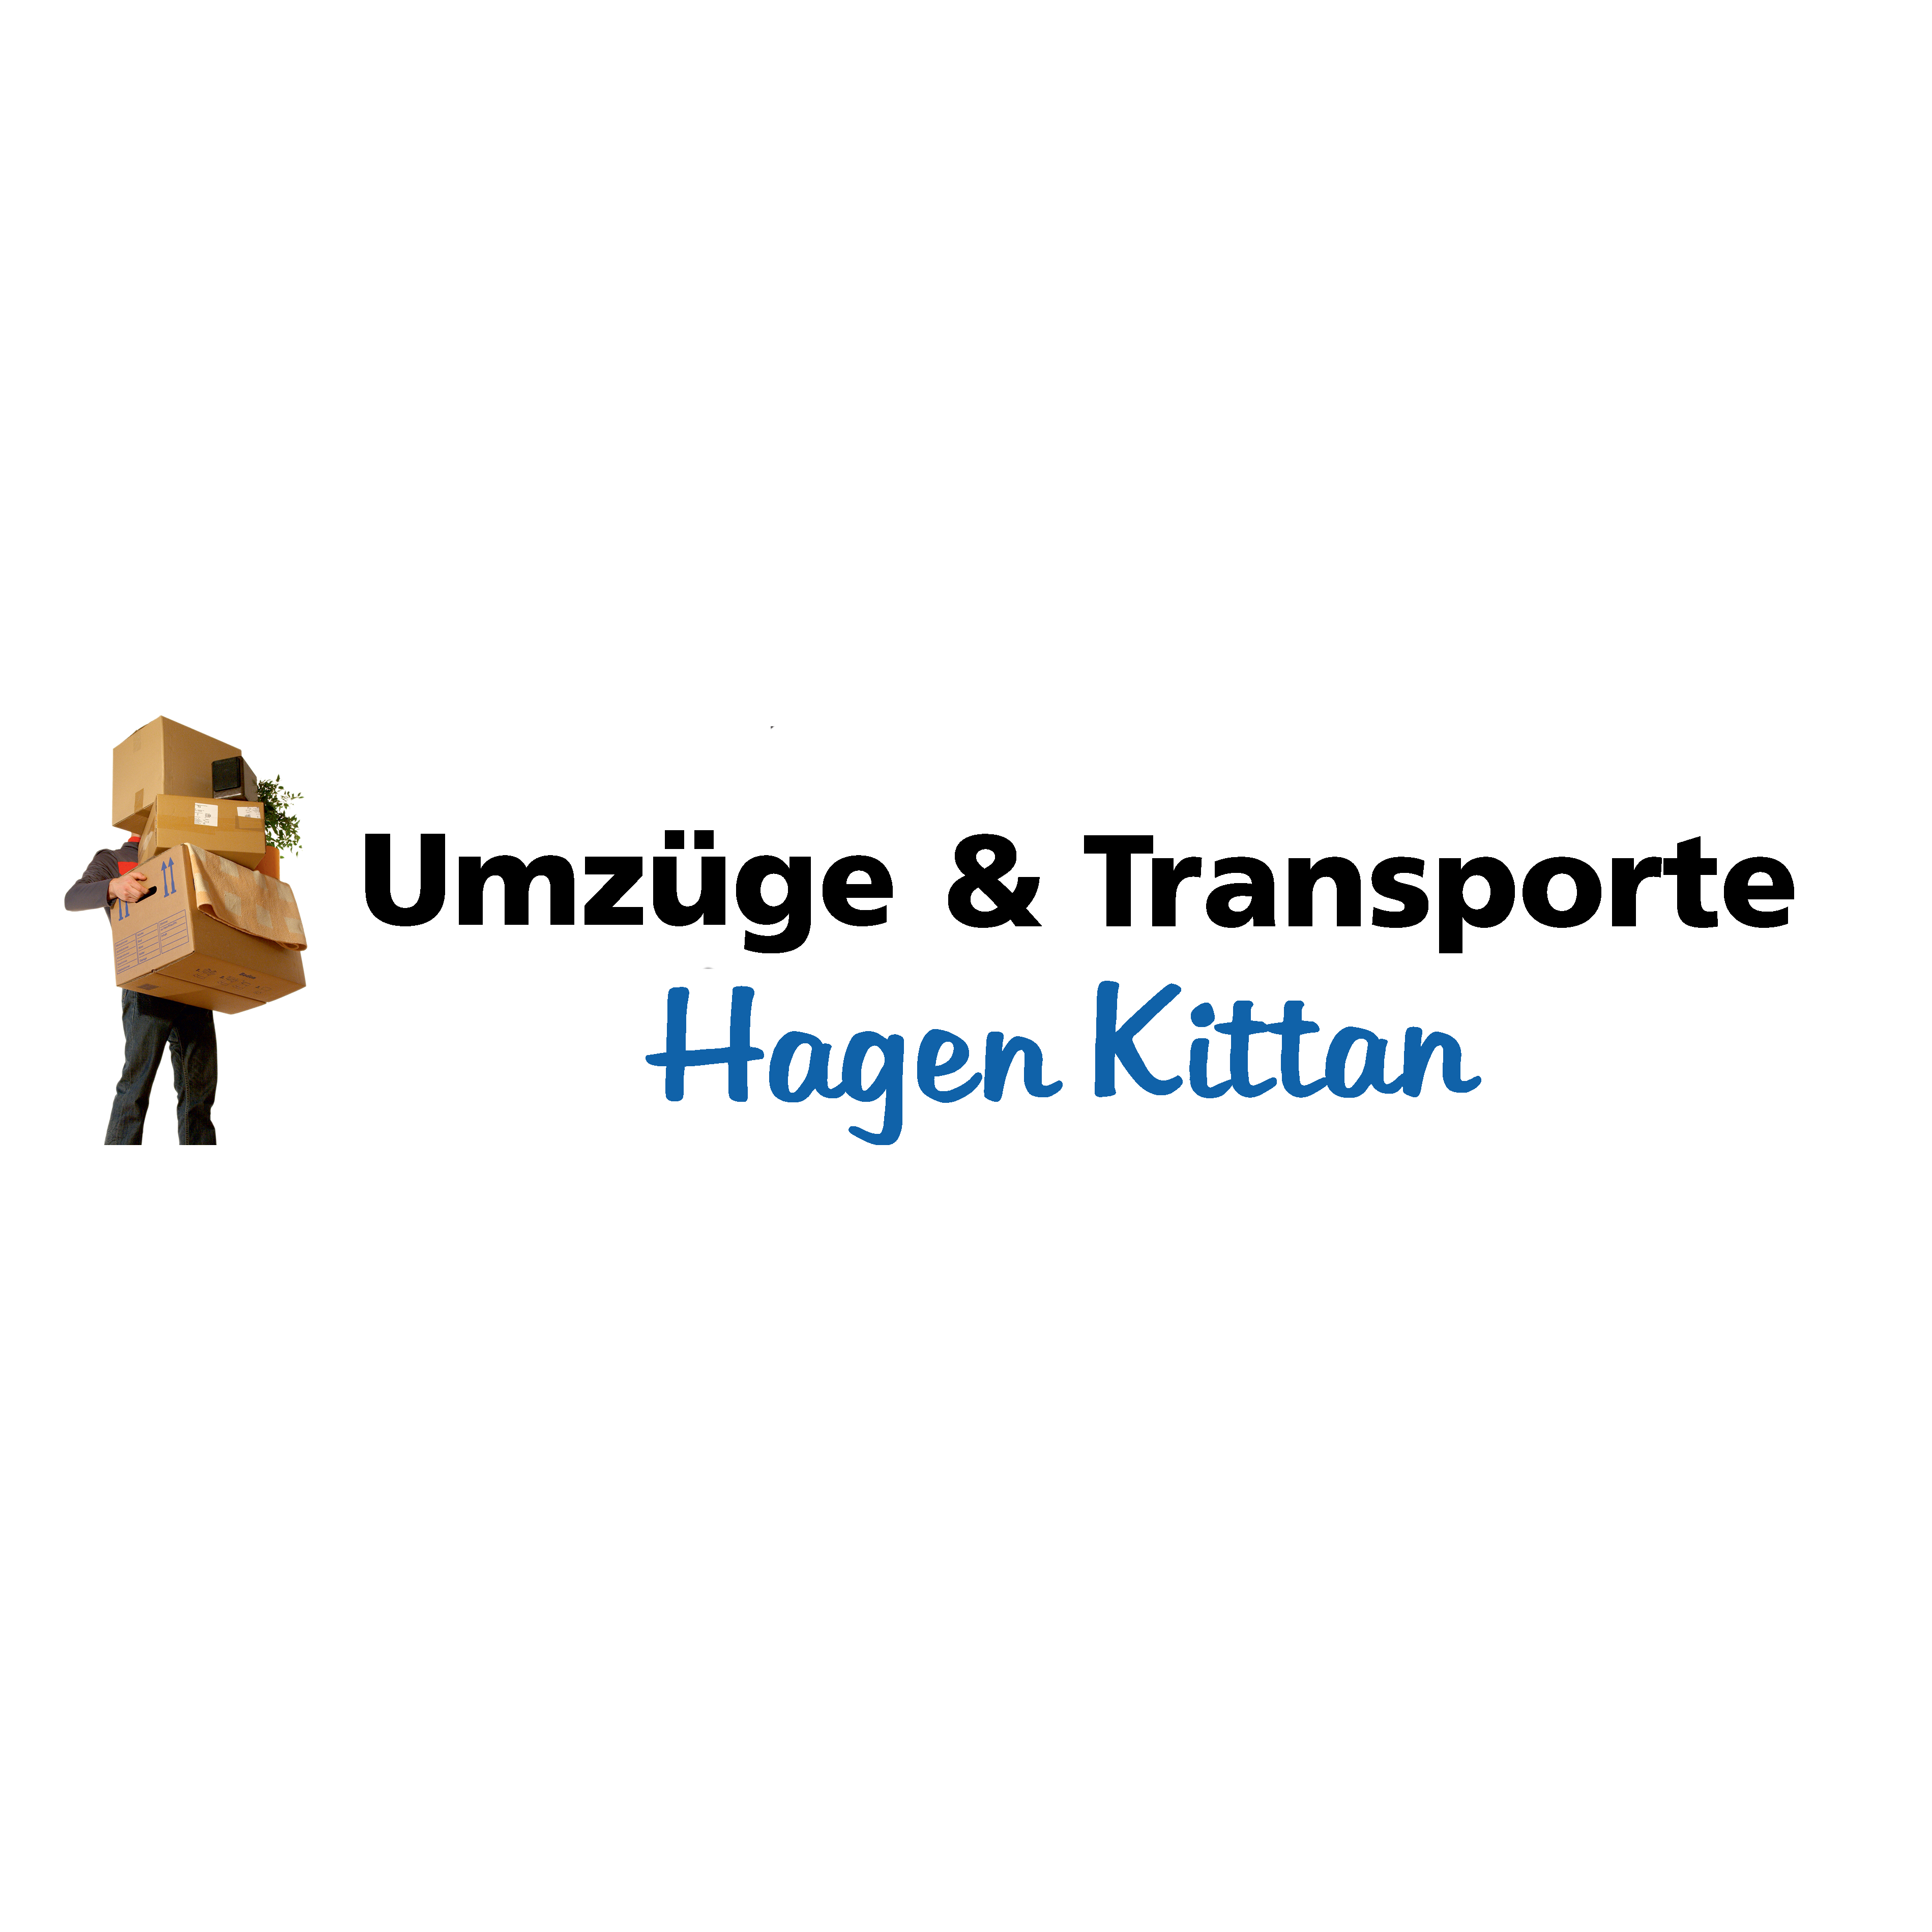 Umzüge & Transporte Hagen Kittan  